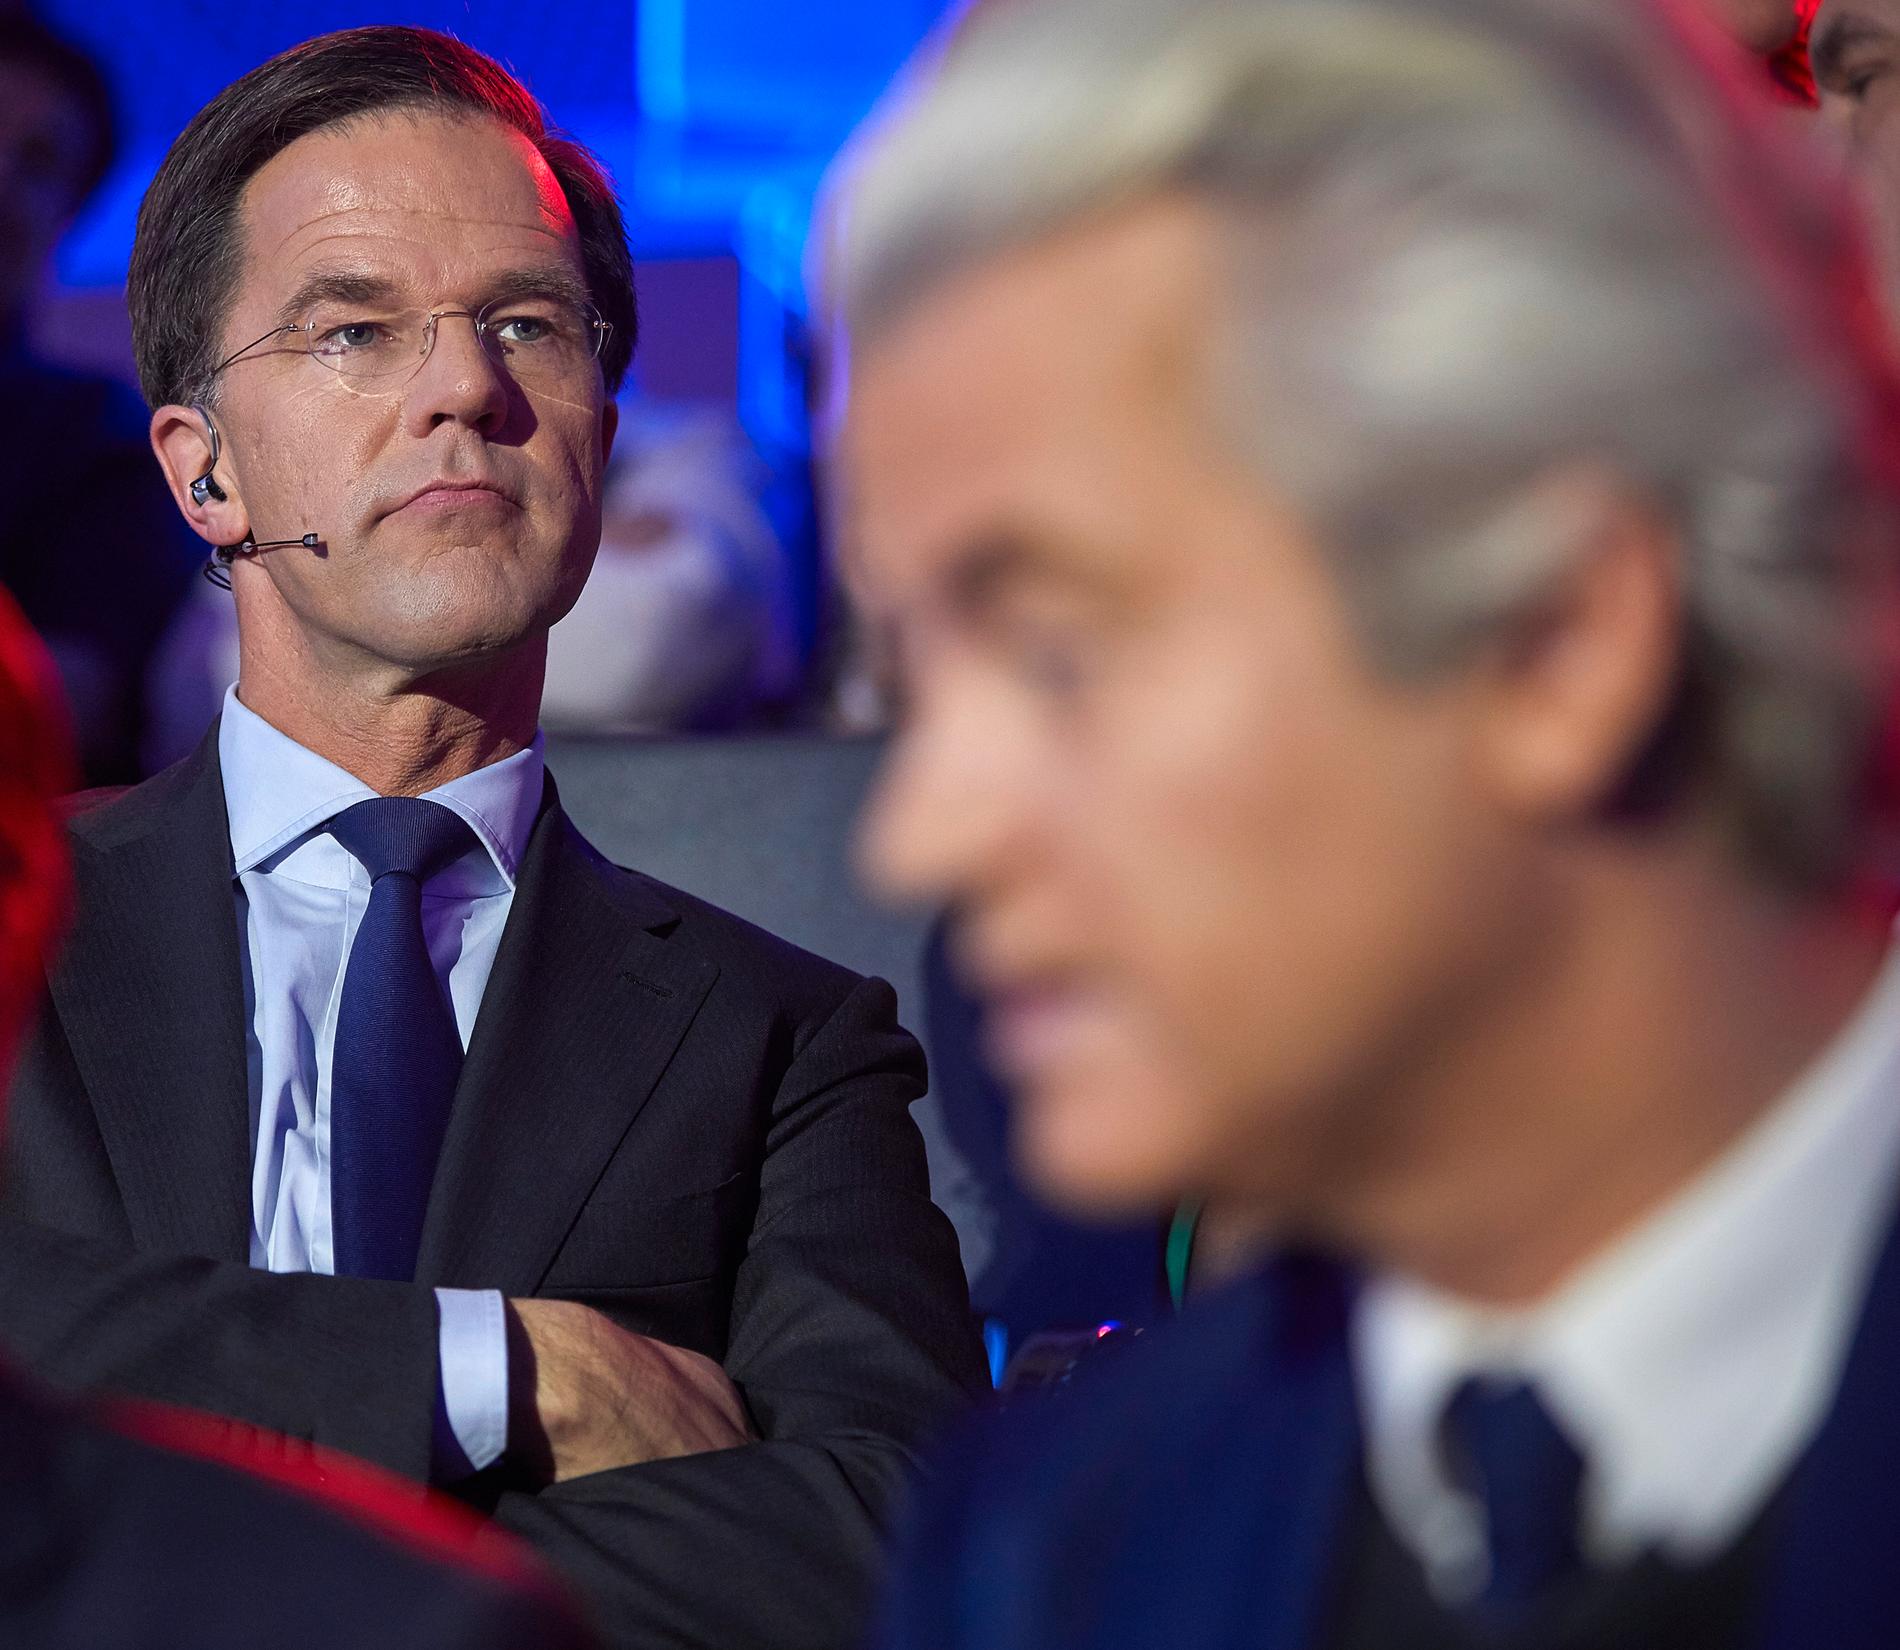  VALG: Den nederlandske statsministeren Mark Rutte, til venstre, og PVV partileder Geert Wilders, til høyre.